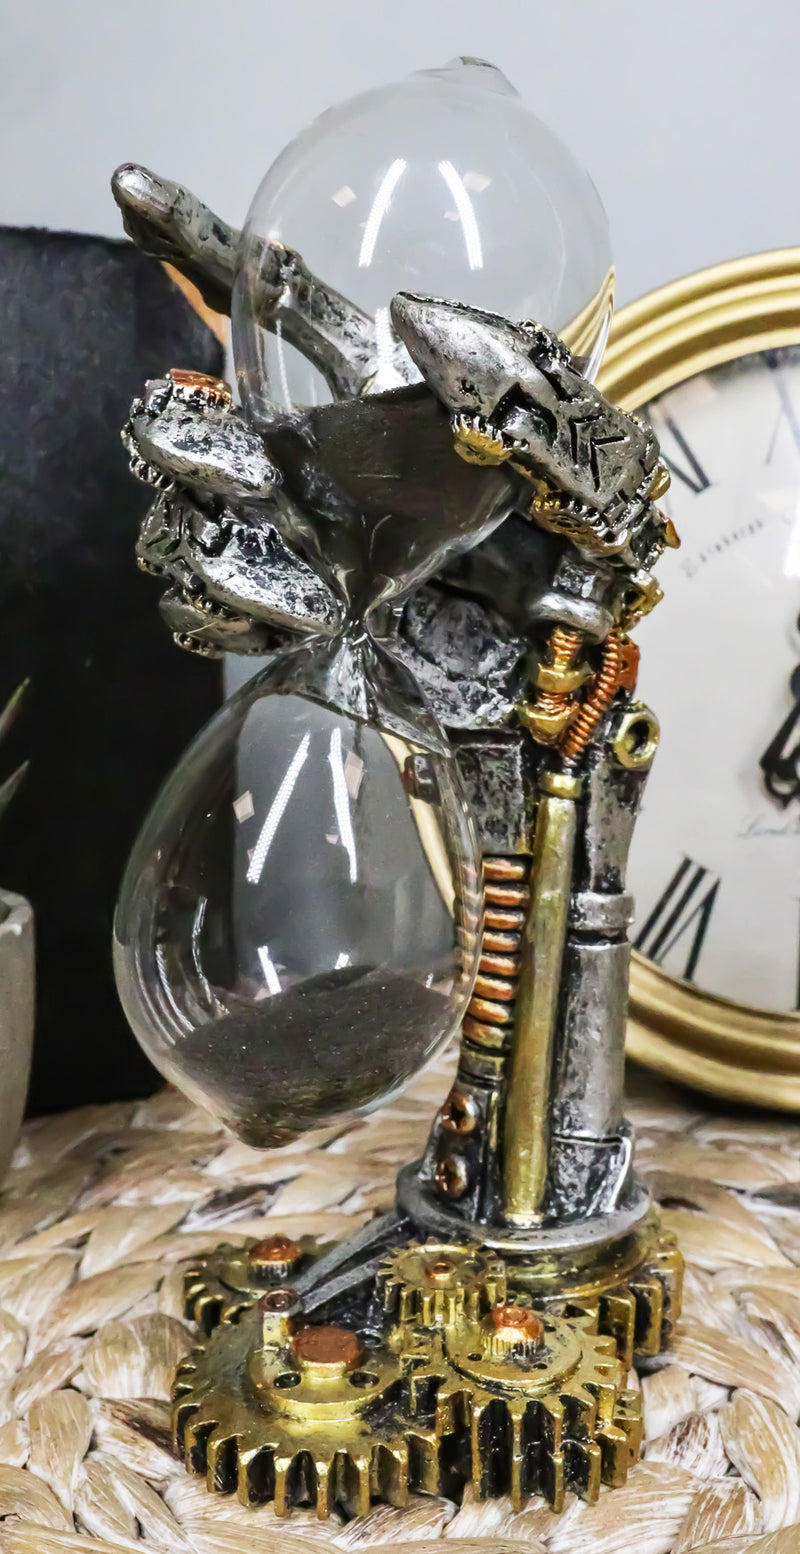 Steampunk Chronambulator Time Warp Machine With Painted Clockwork